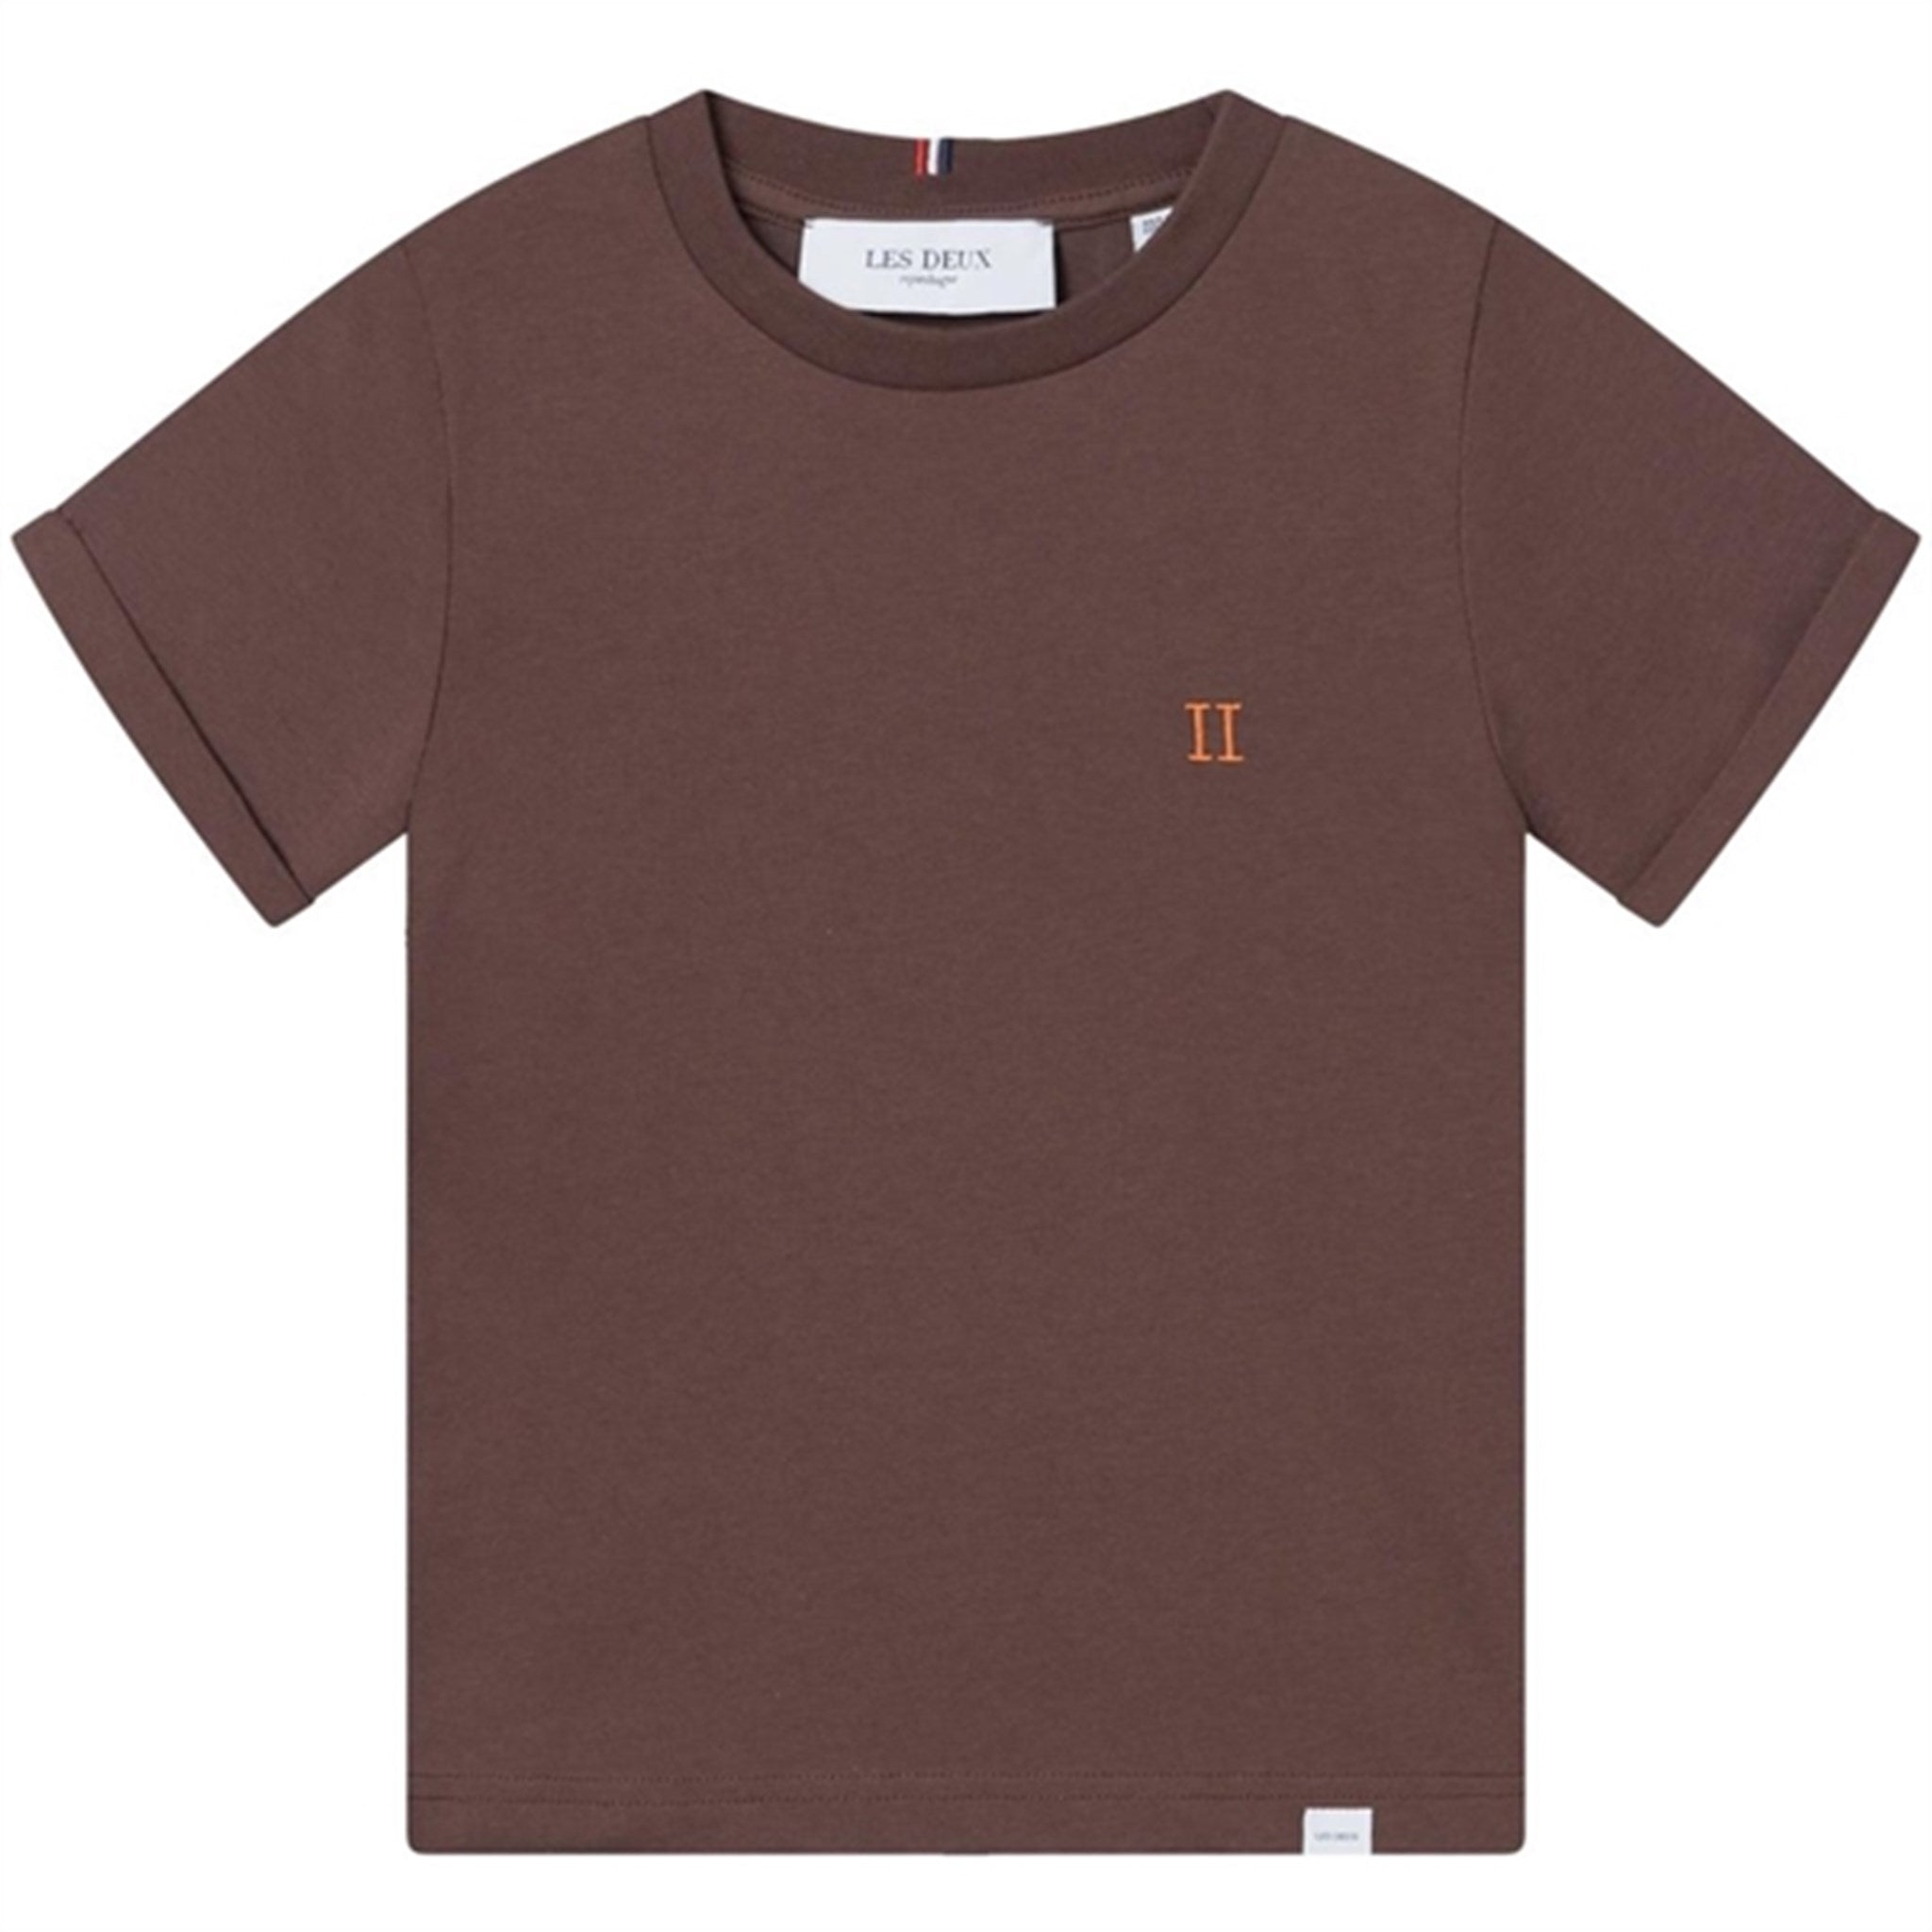 Les Deux Kids Ebony Brown/Orange Nørregaard T-Shirt